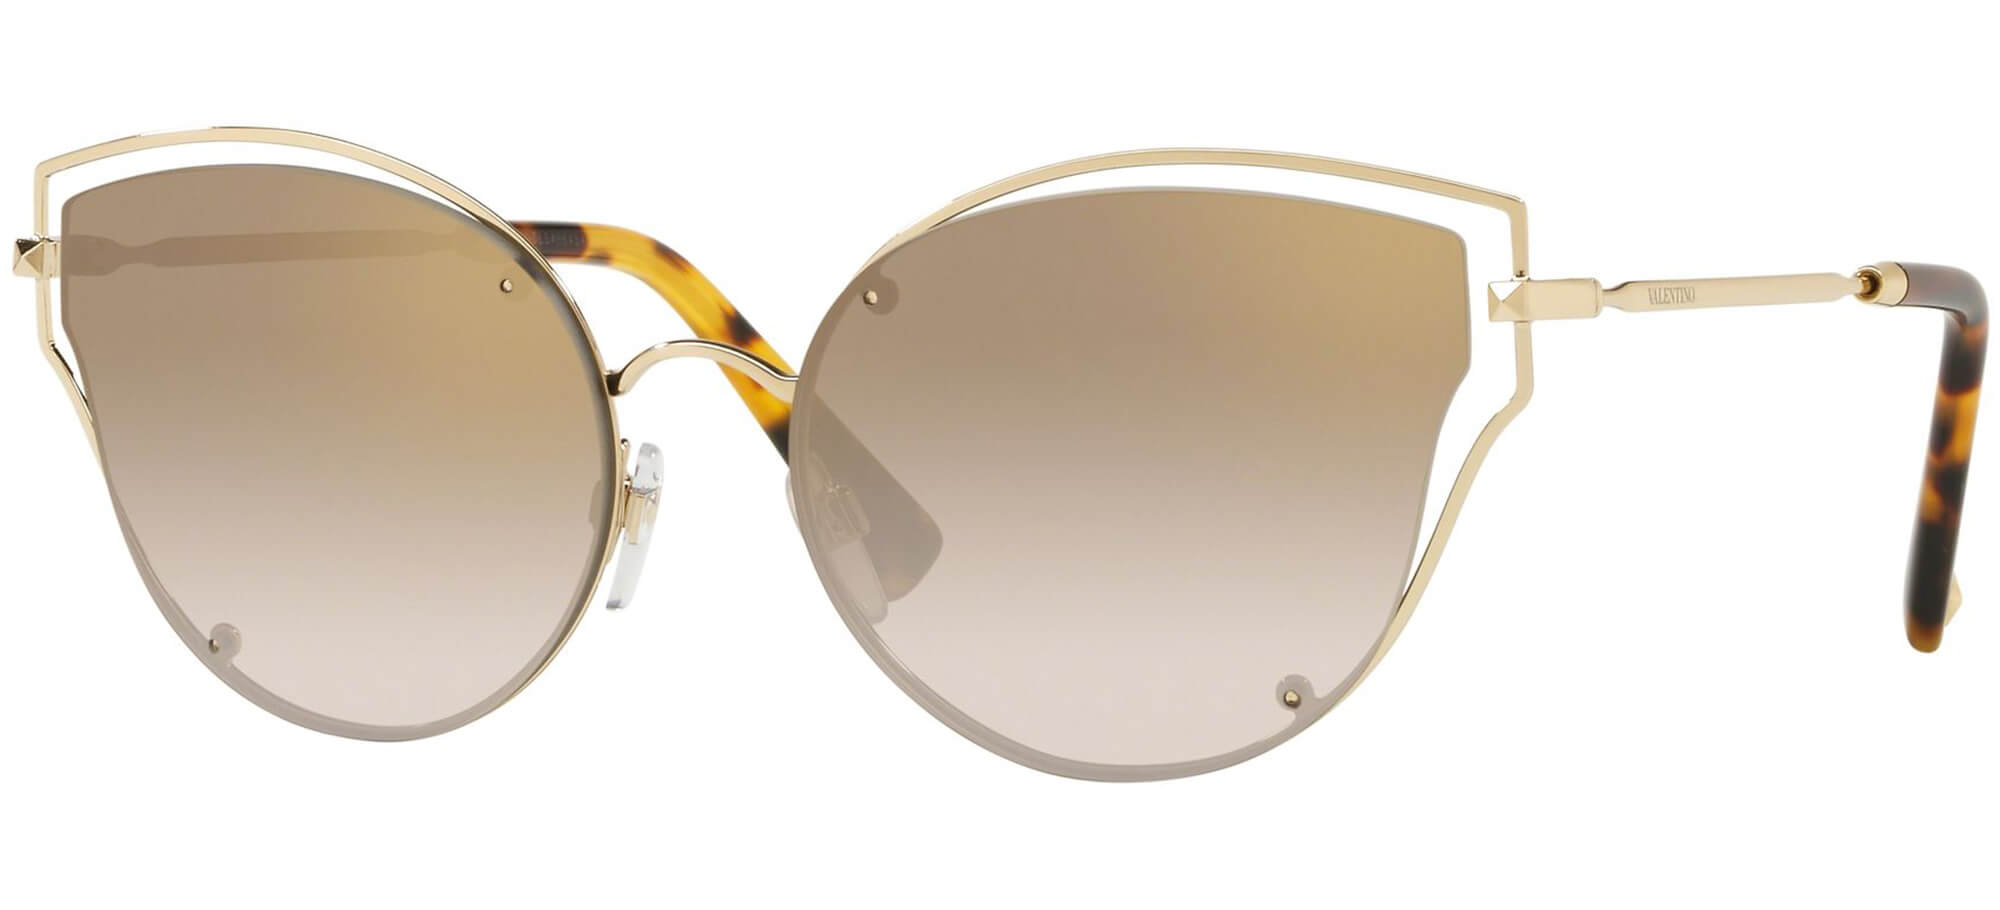 ValentinoVA 2015Pale Gold/gold Shaded (3003/7I)